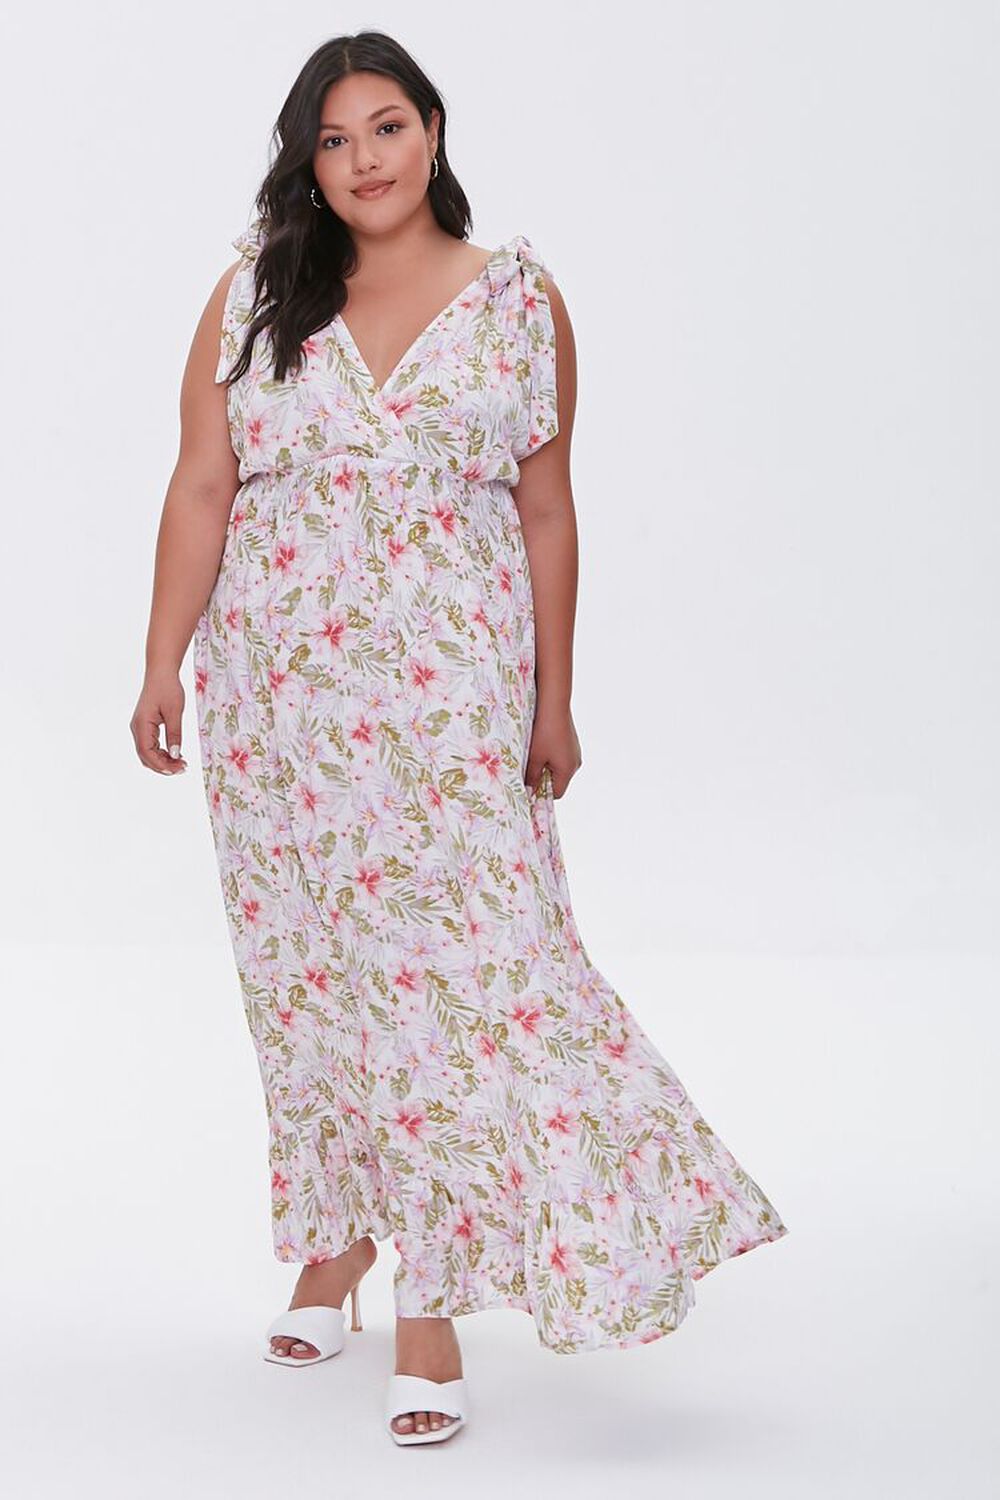 CREAM/MULTI Plus Size Floral Print Midi Dress, image 2